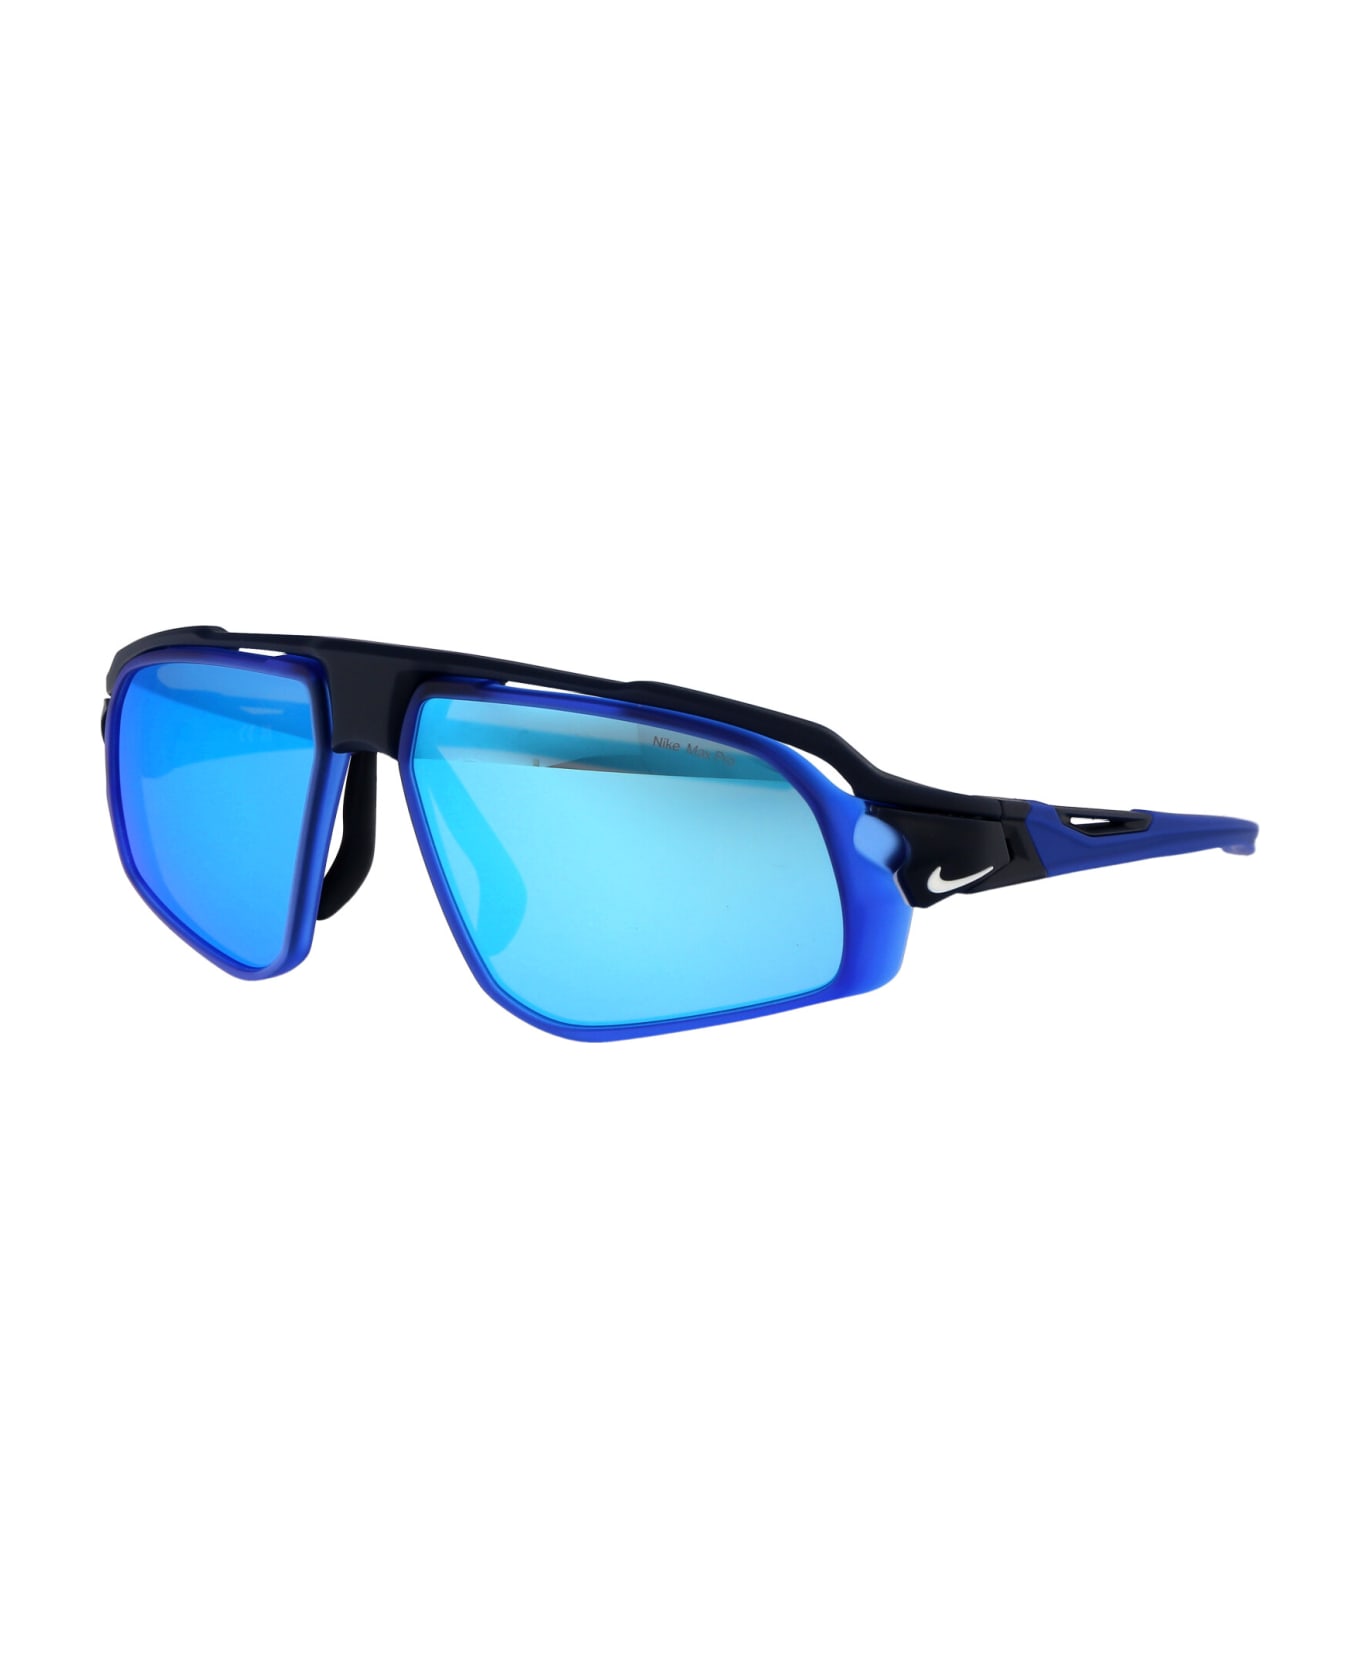 Nike Flyfree M Sunglasses - 410 BLUE MIRROR MATTE NAVY